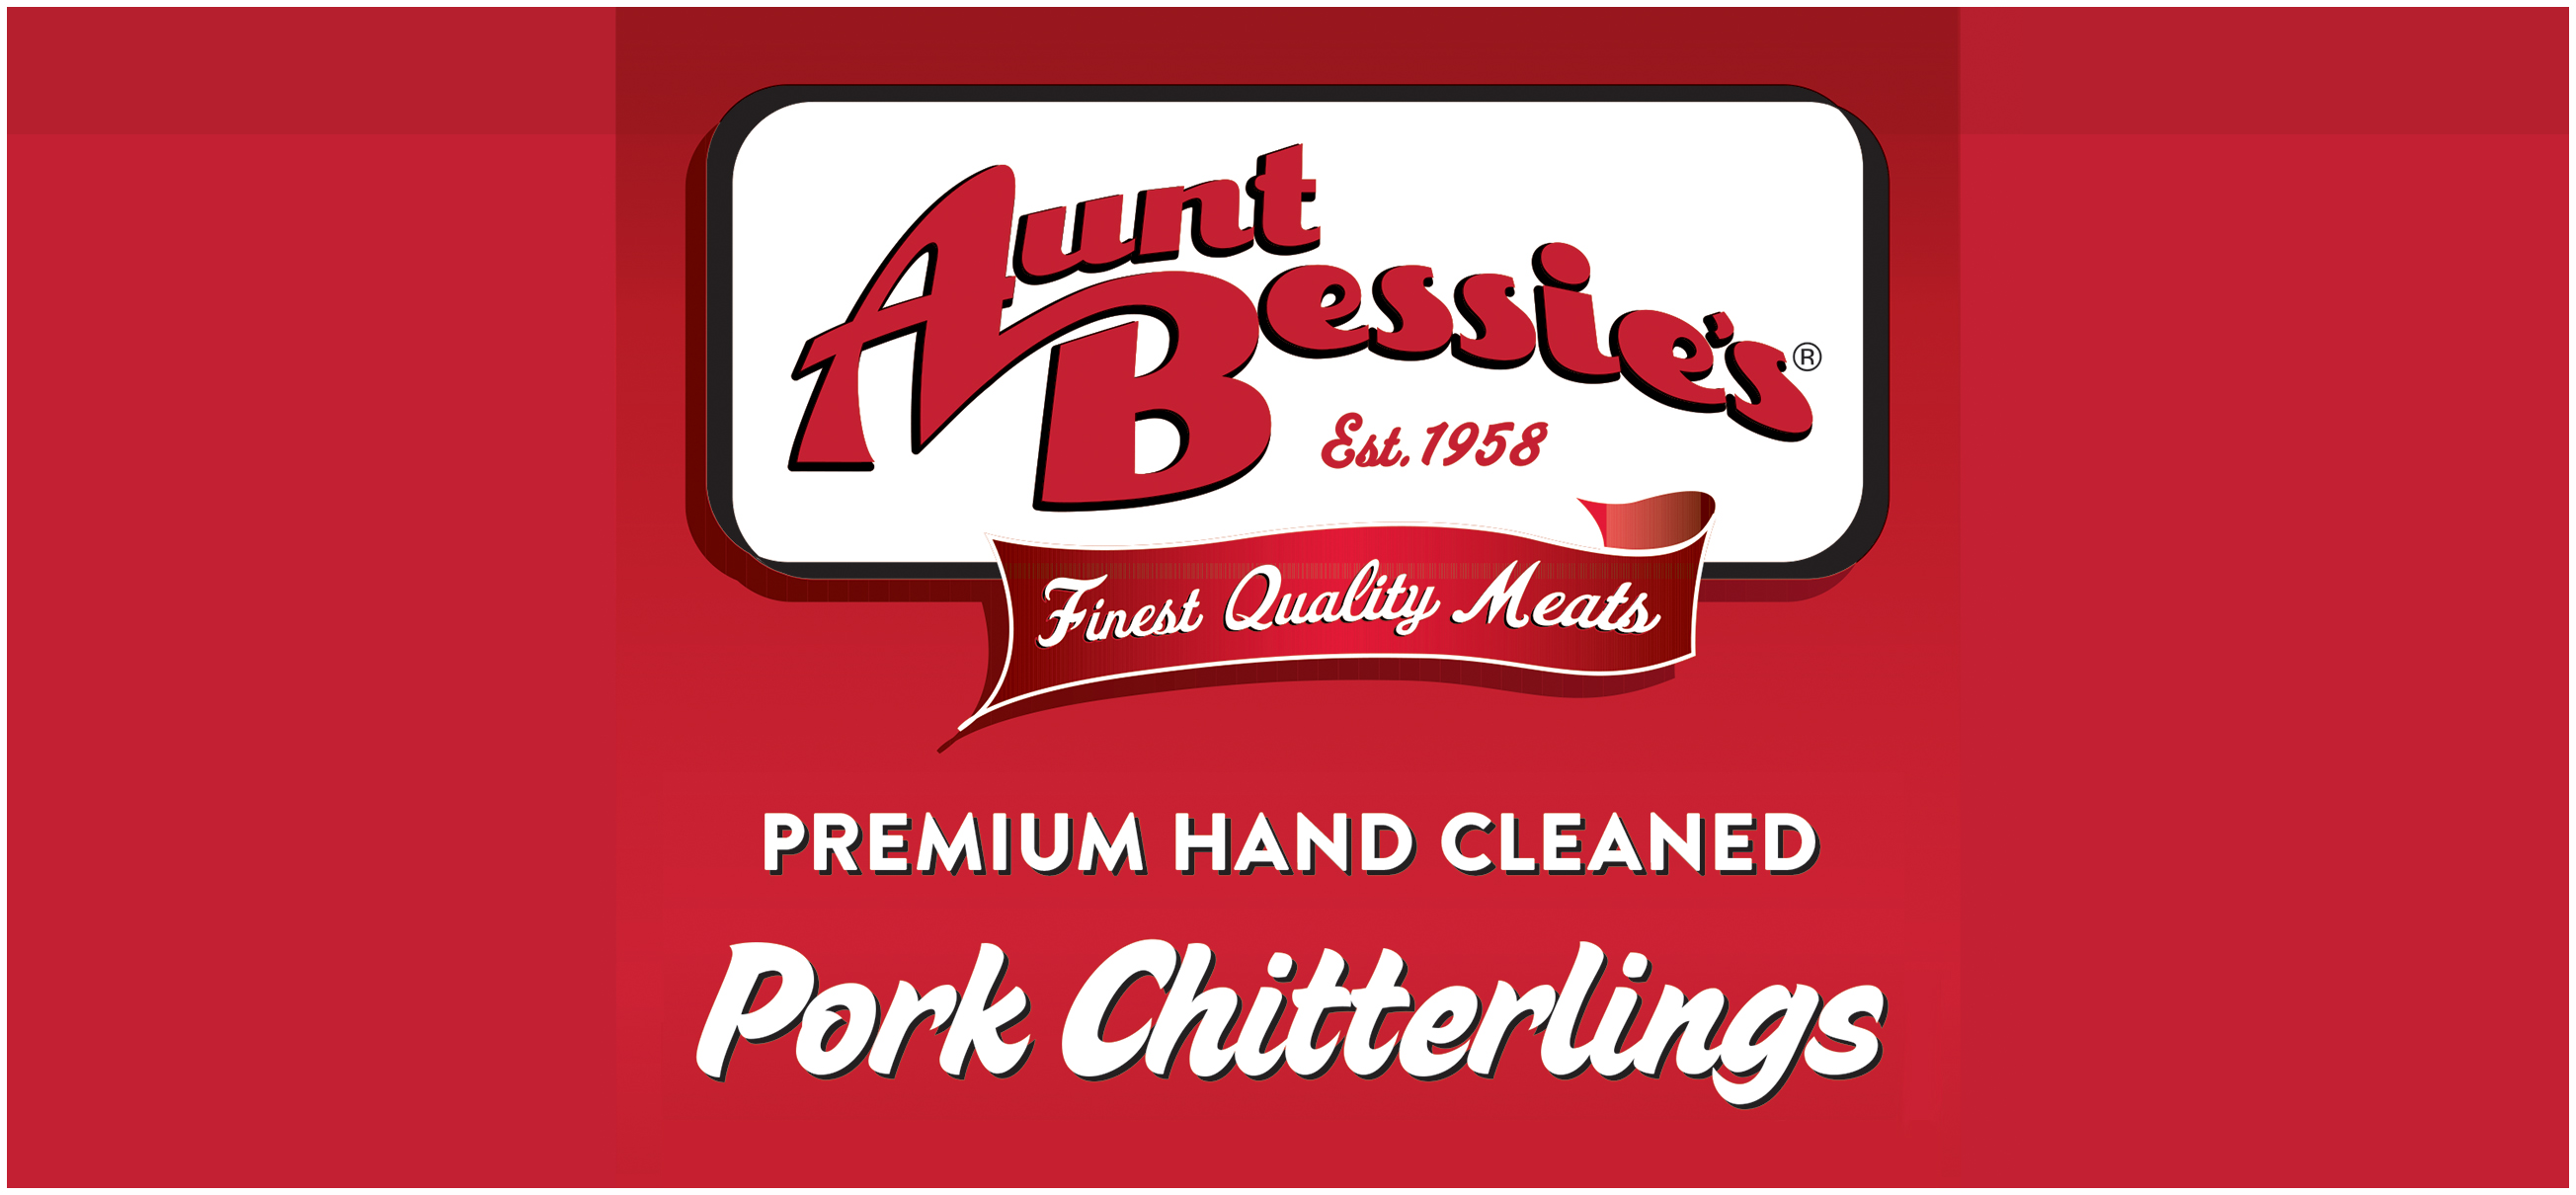 Aunt Bessie's Premium Hand Cleaned Pork Chitterlings